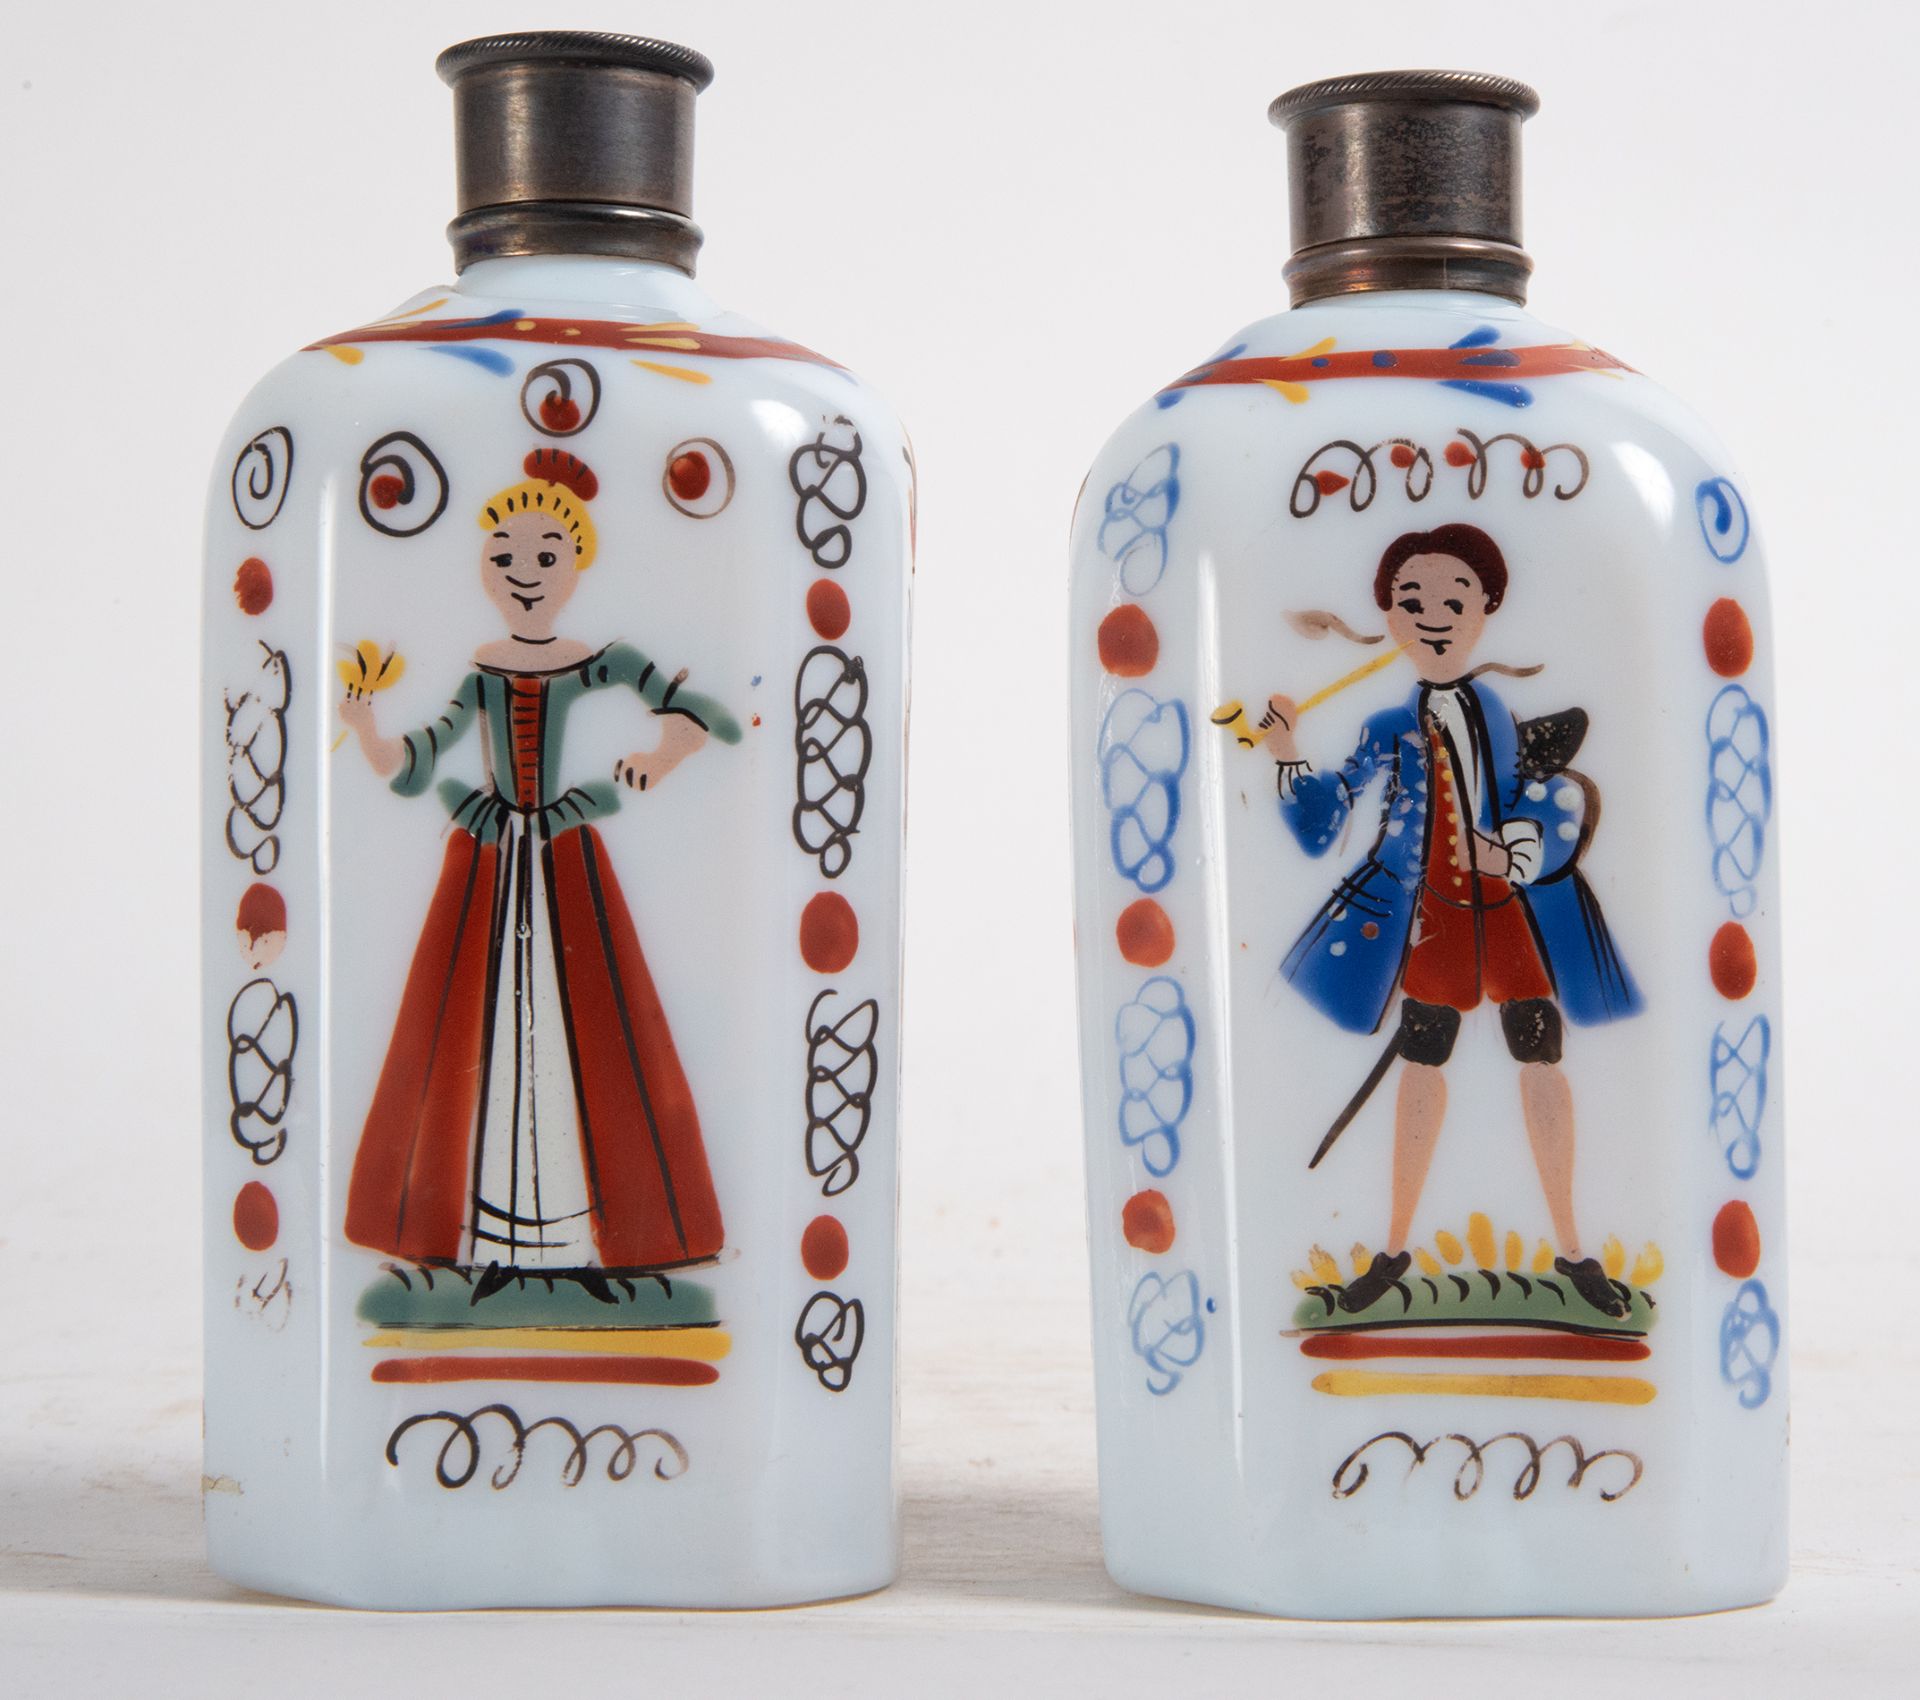 Pair of Bottles in Opanina, La Granja, 19th century